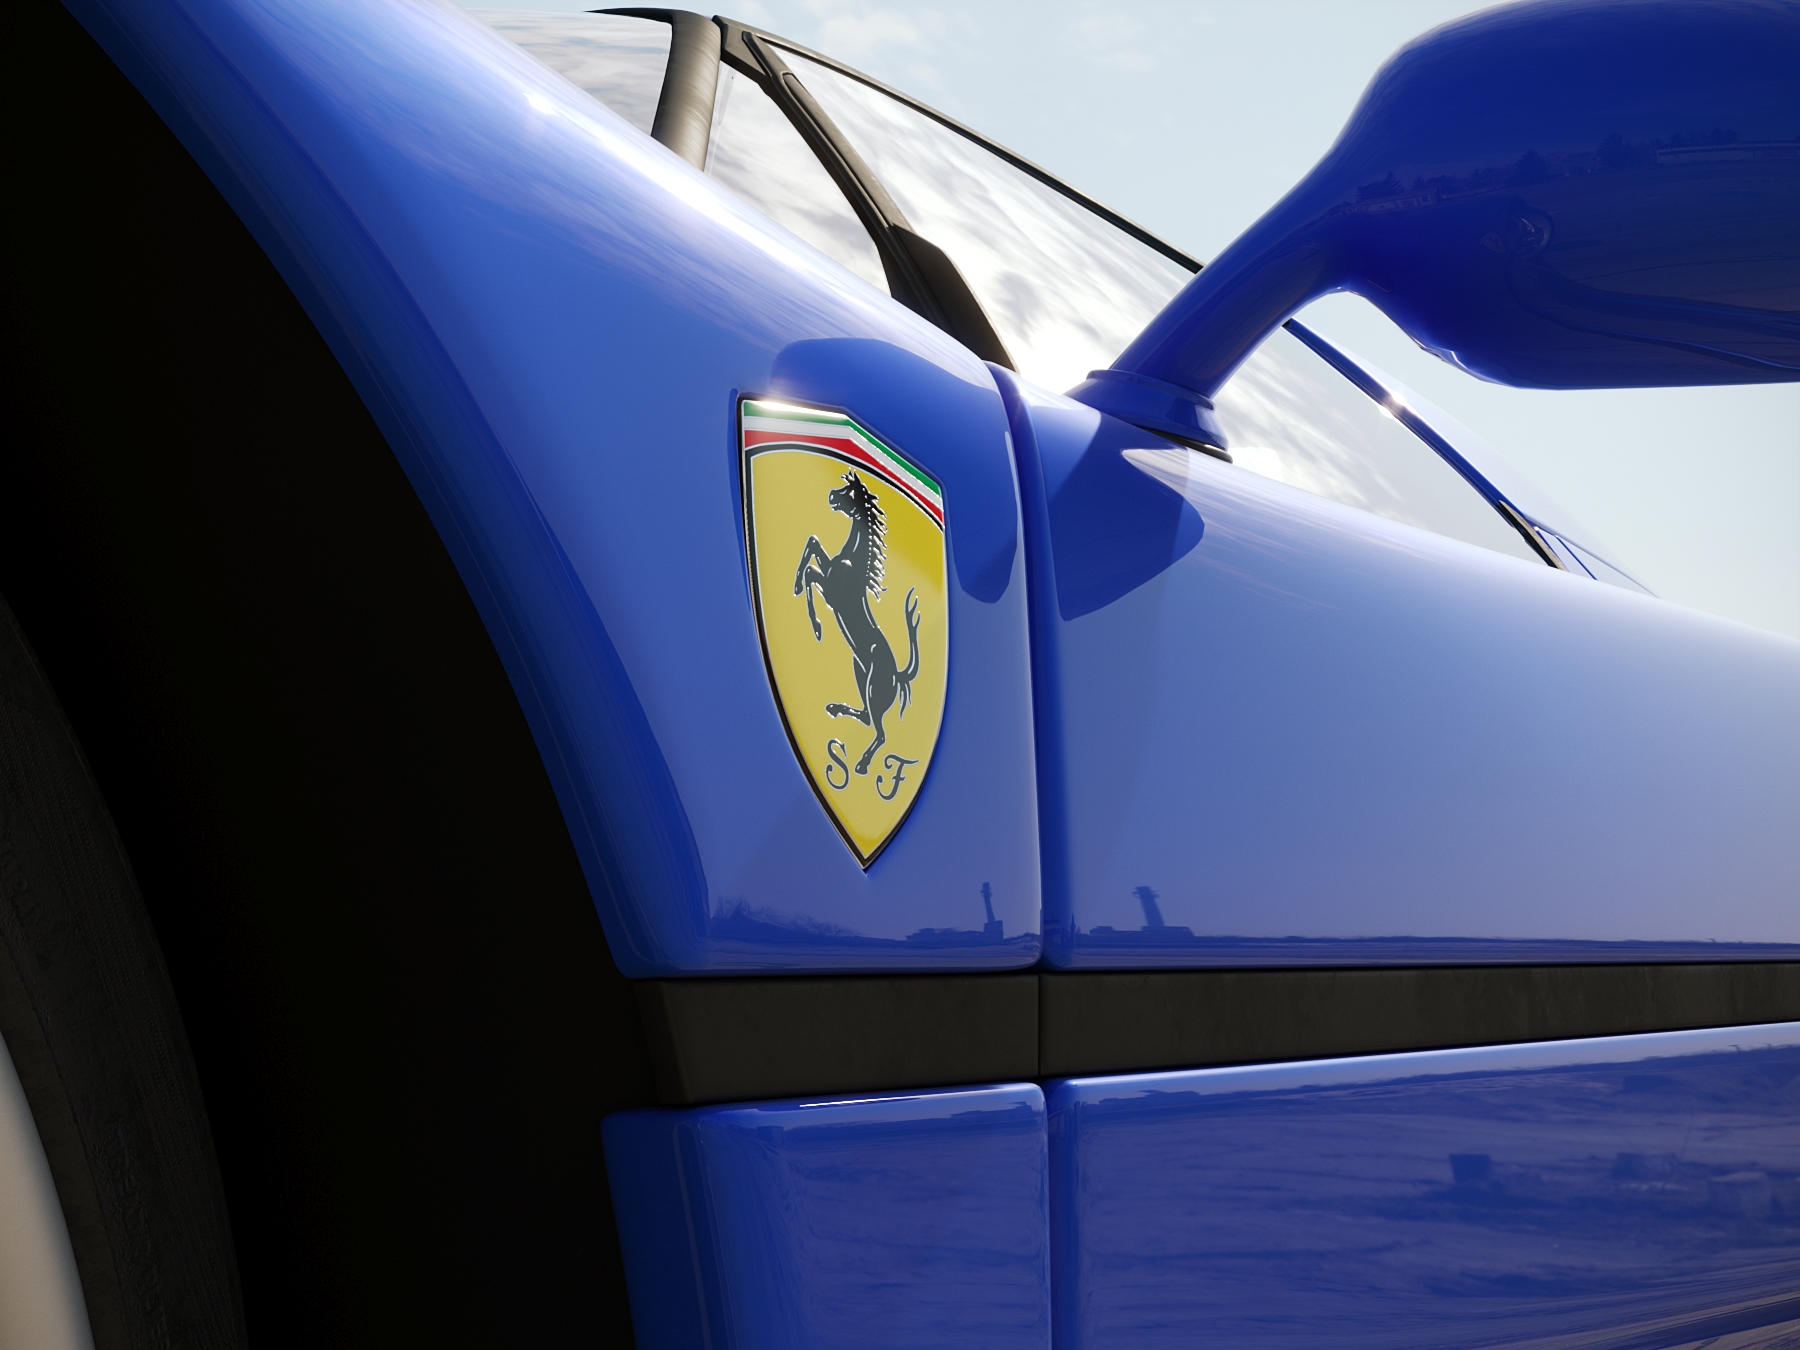 Car Render Challenge 2022 - Ferrari F50